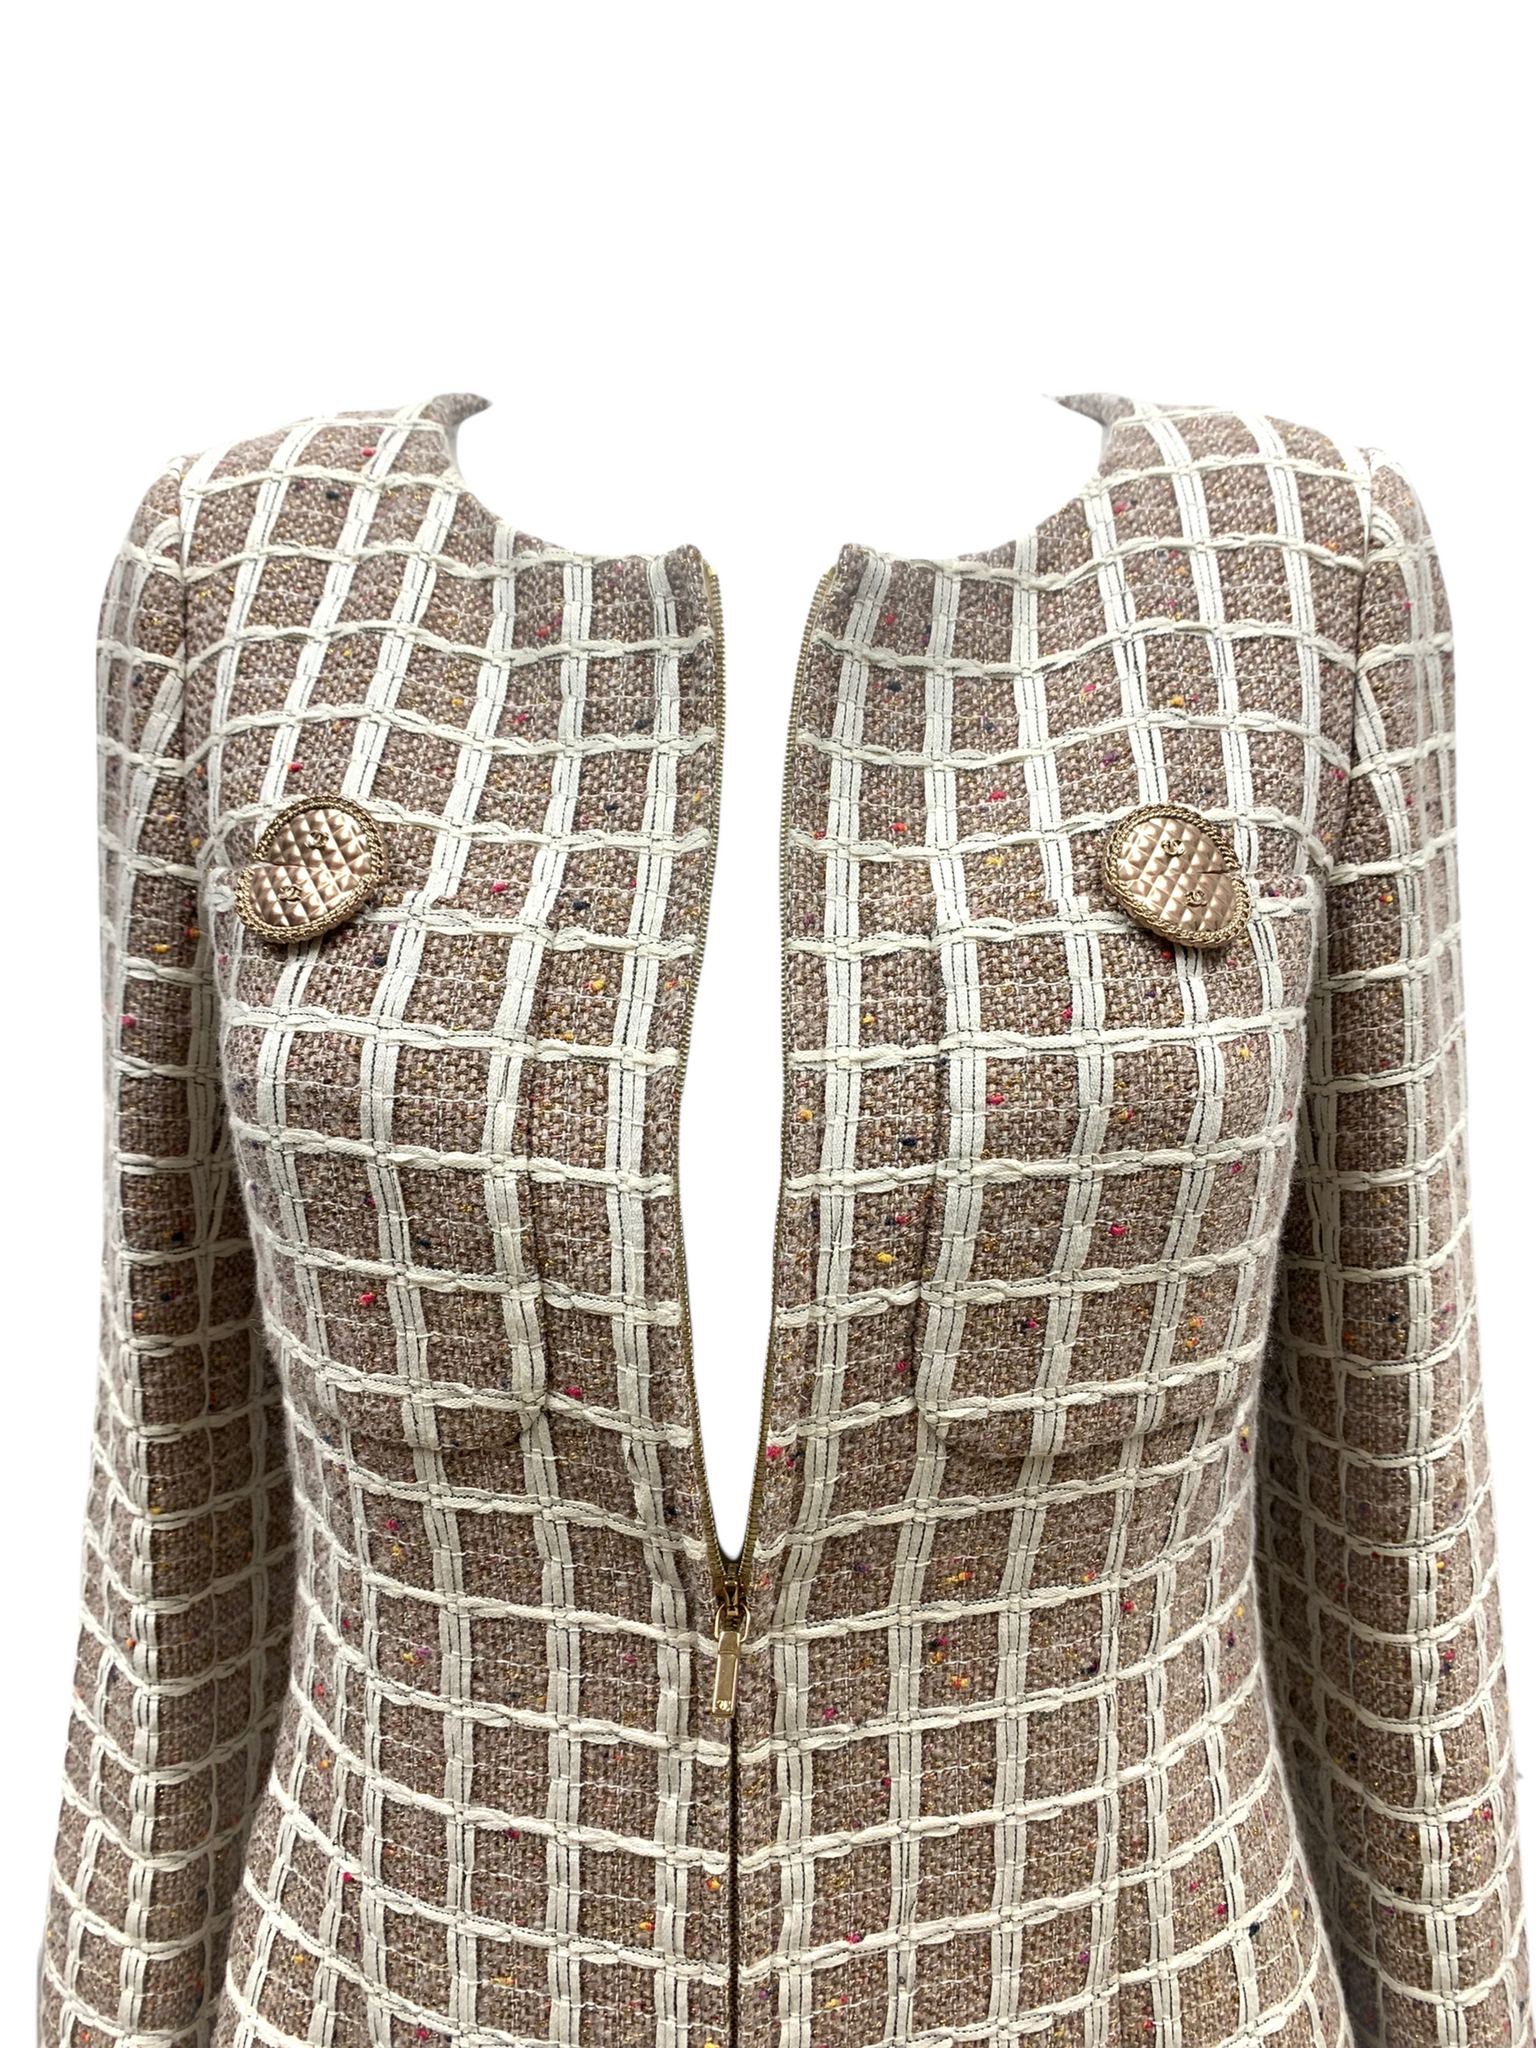 CHANEL Lace Trim Pink Tweed Jacket Skirt Suit Set CC Buttons  38 US 6  Vintage  eBay